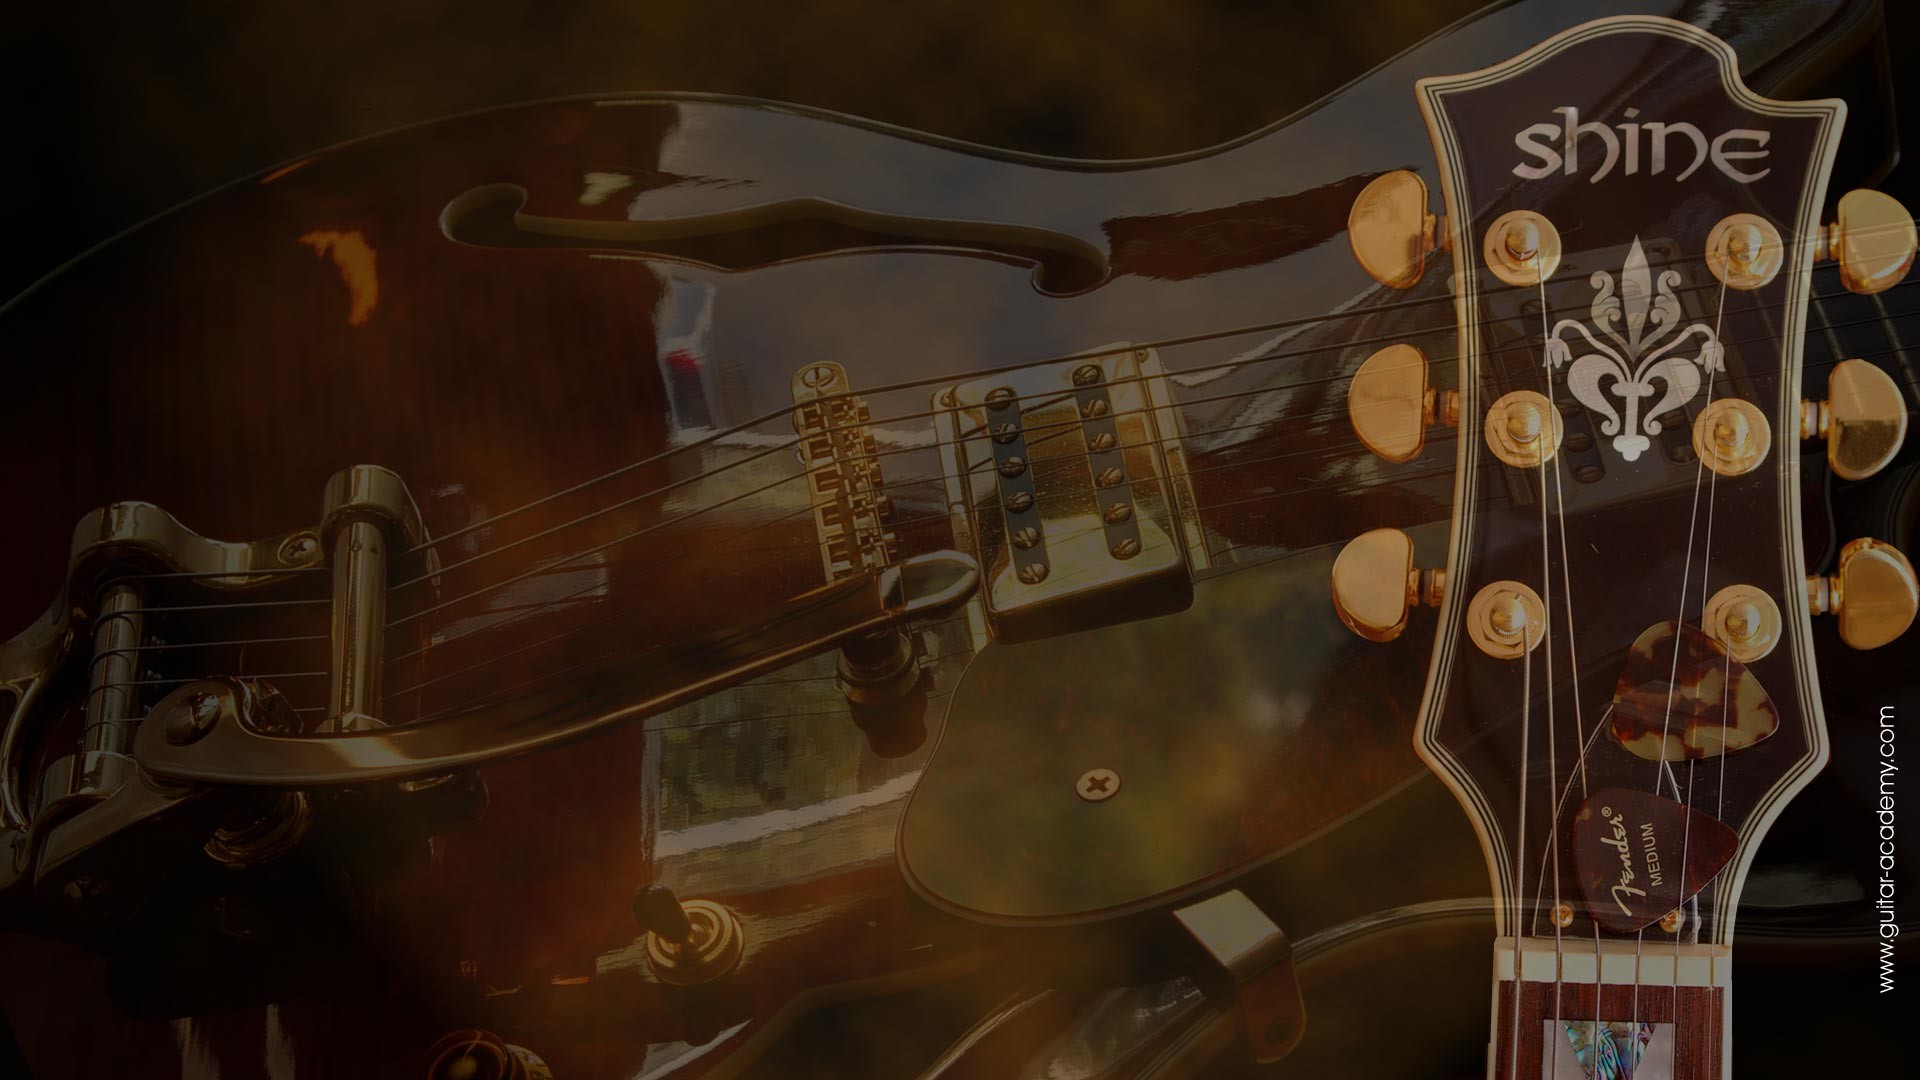 1920x1080 Guitar wallpaper, Shine semi-acoustic guitar, Gibson style